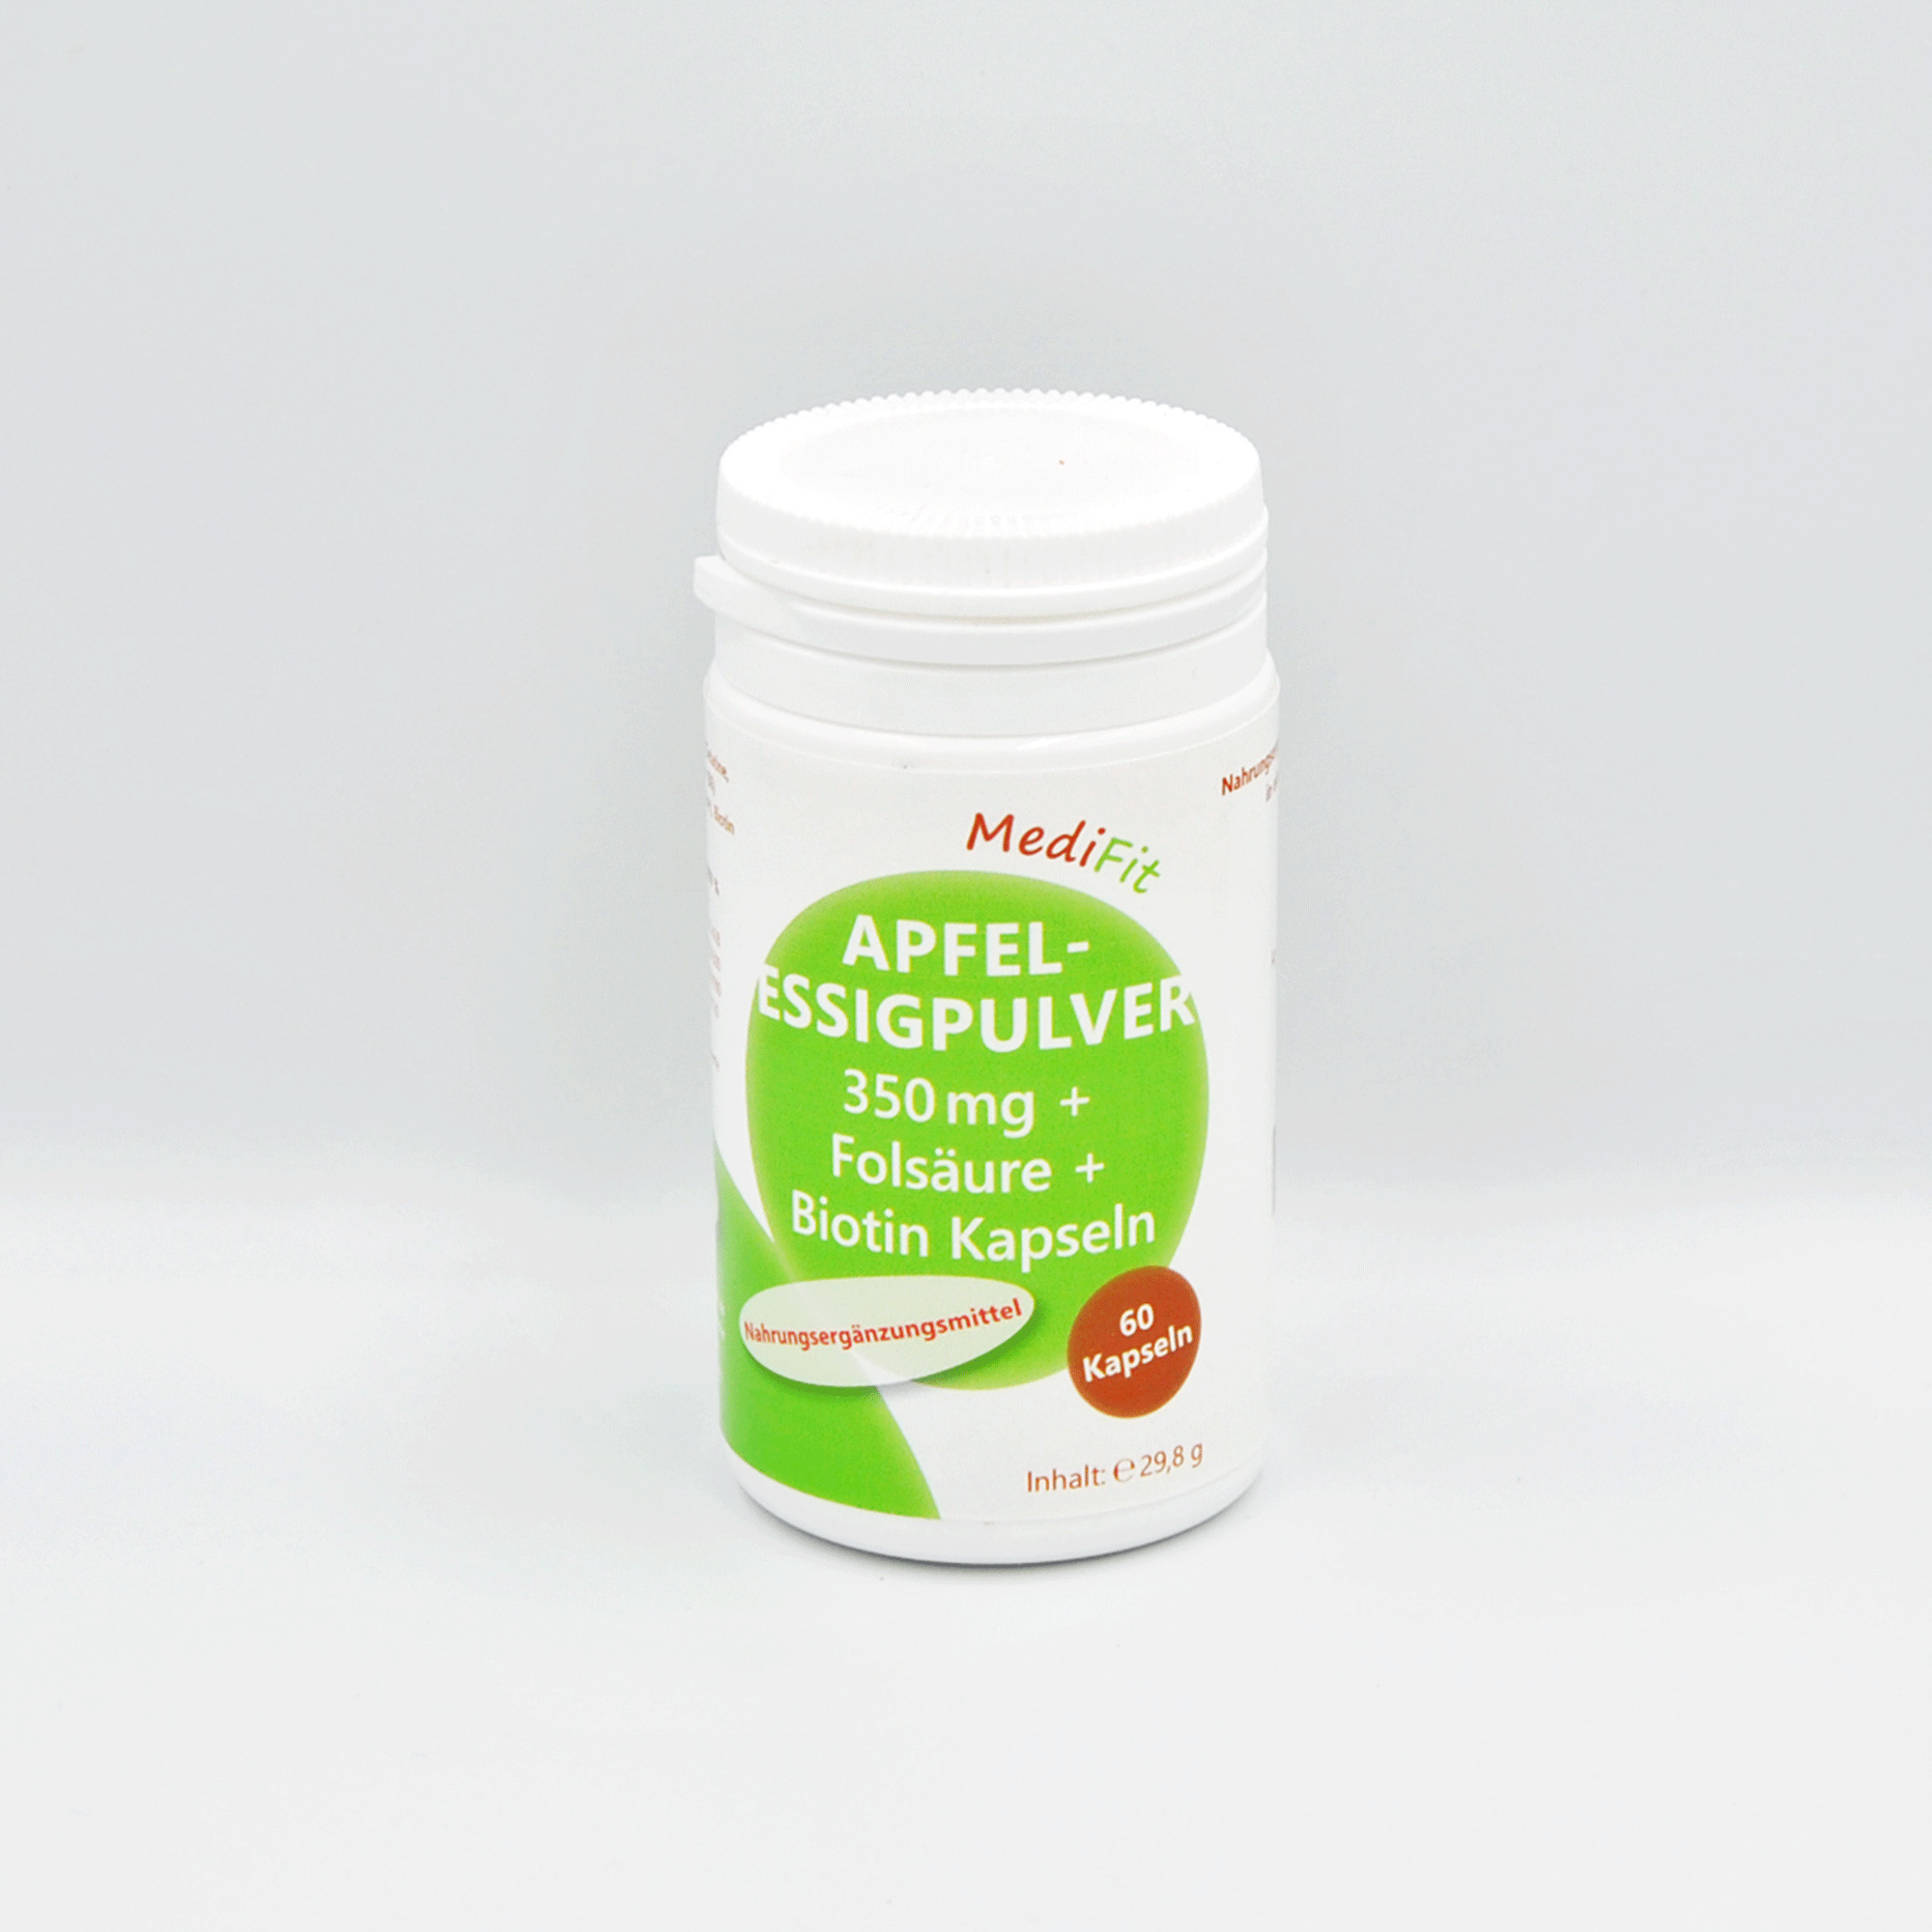 Apfelessigpulver 350 mg + Folsäure + Biotin